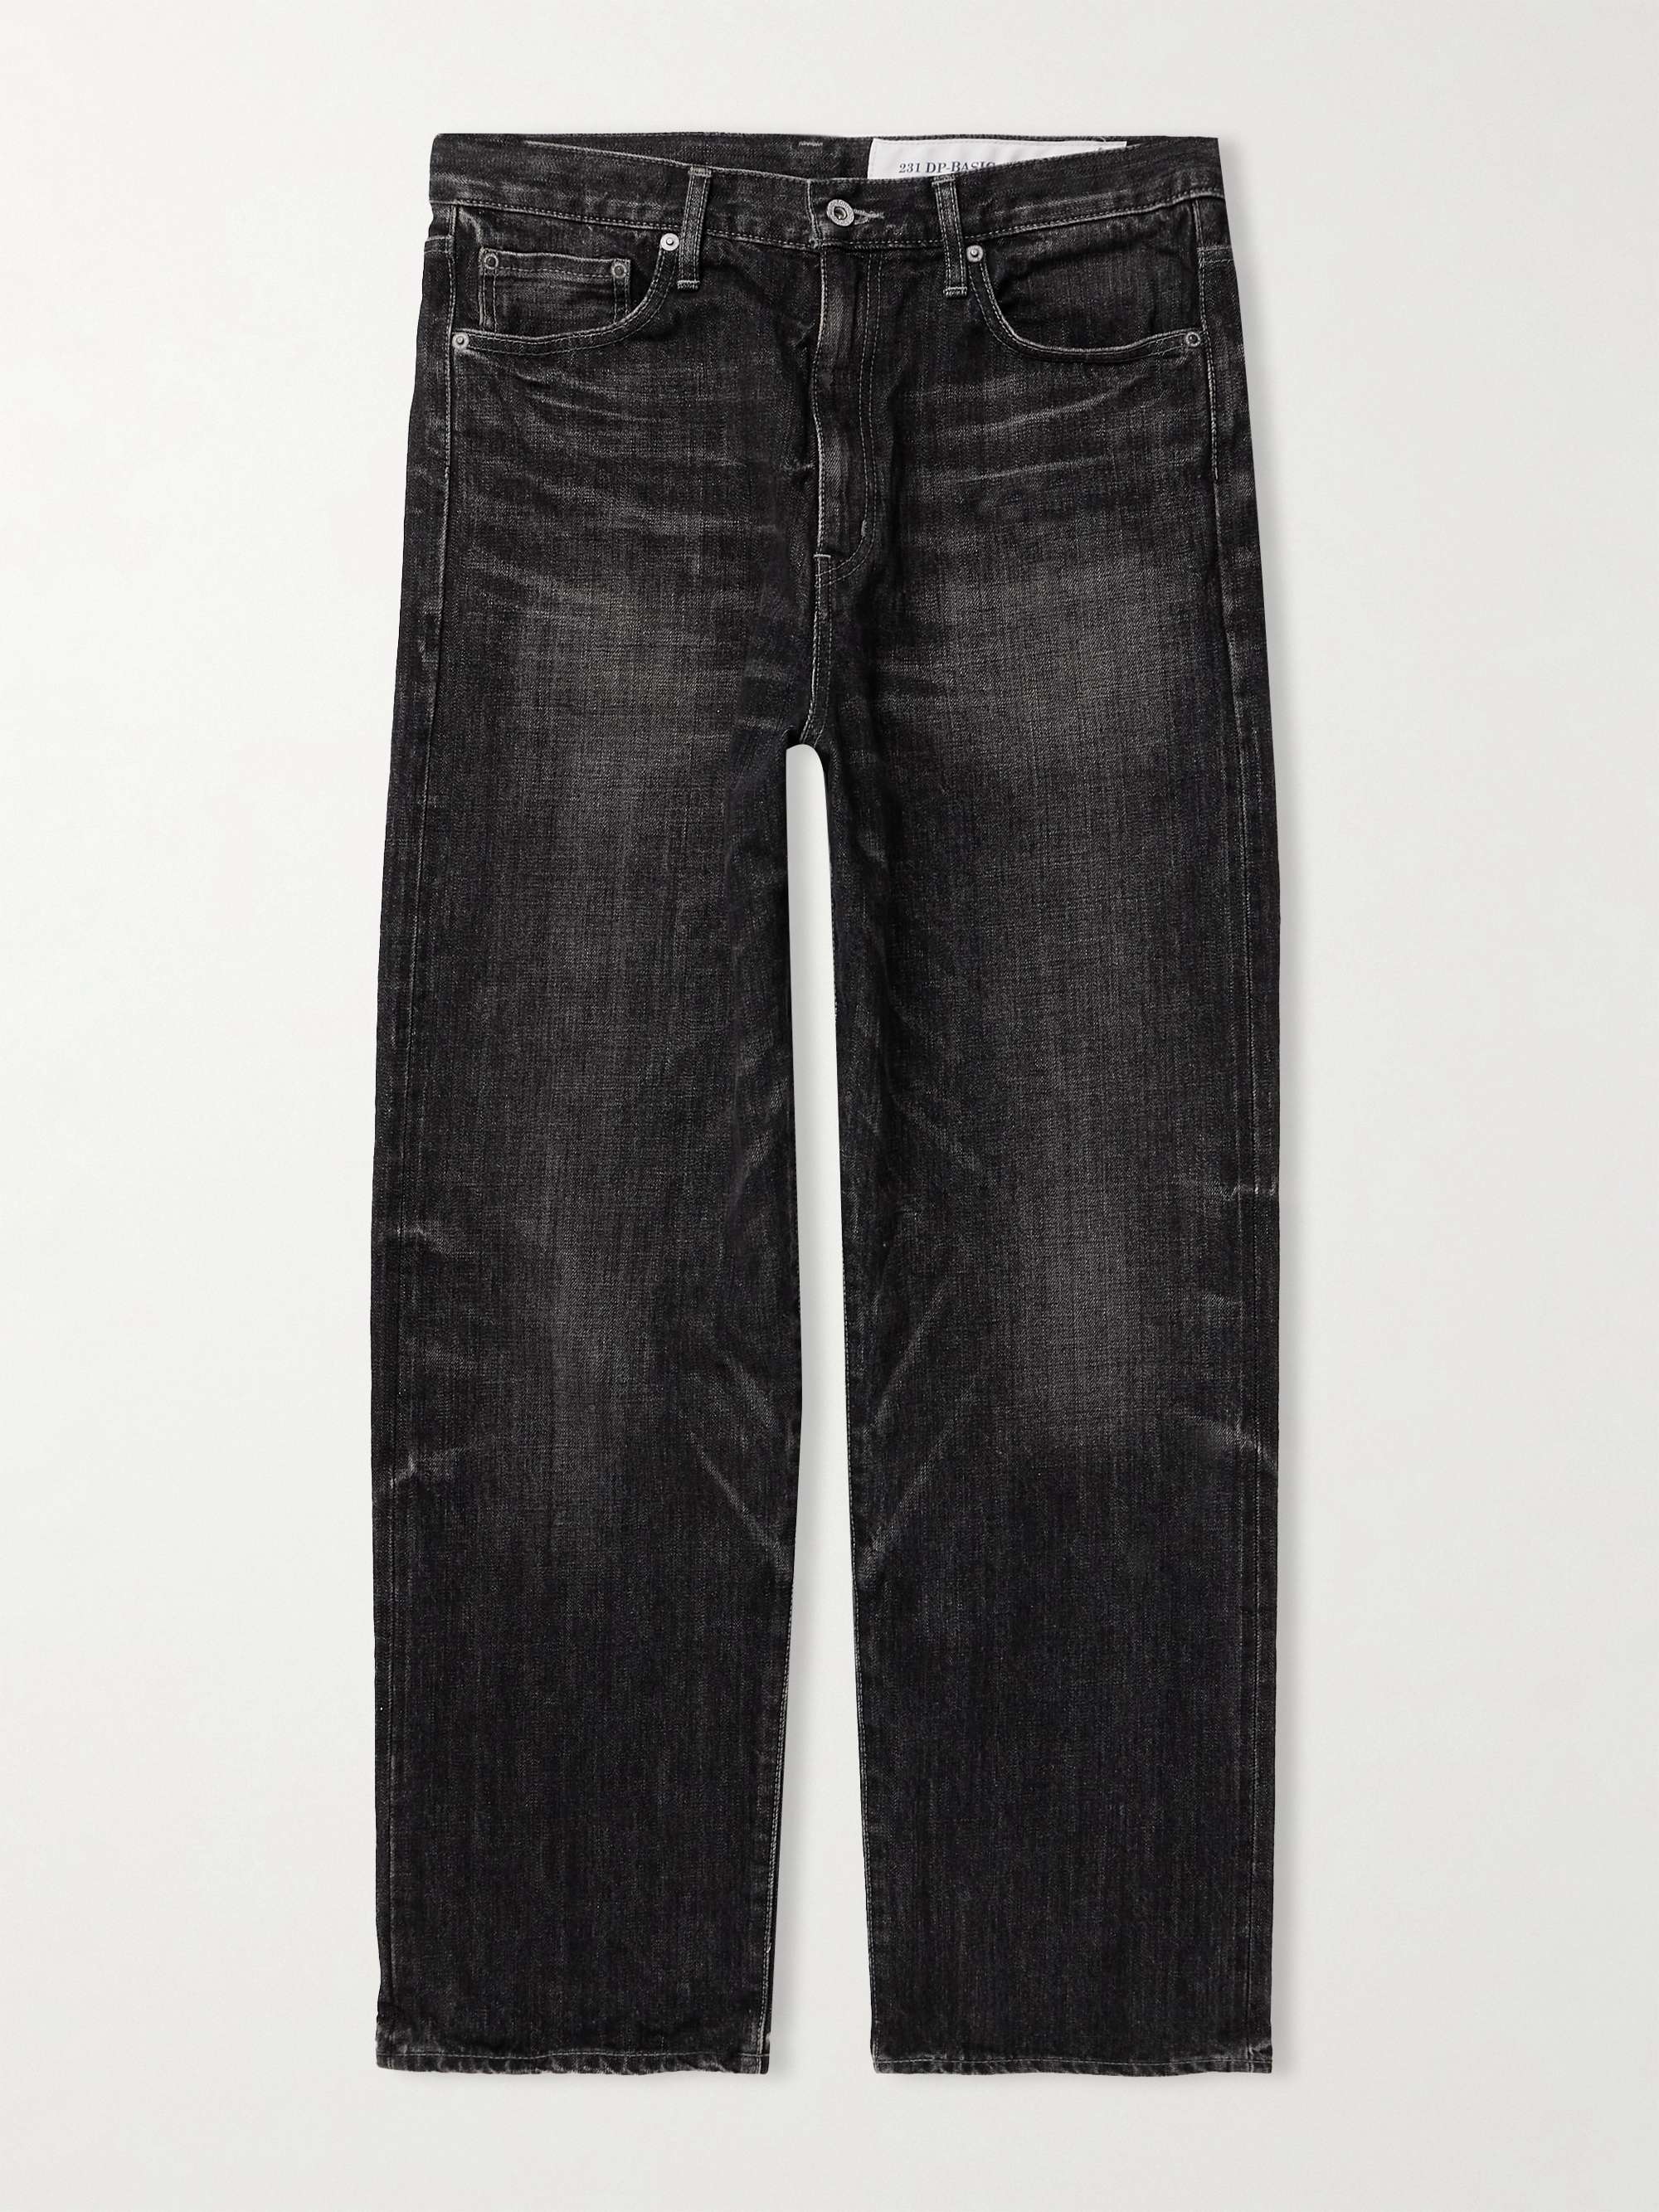 NEIGHBORHOOD Leather-Trimmed Jeans for Men | MR PORTER